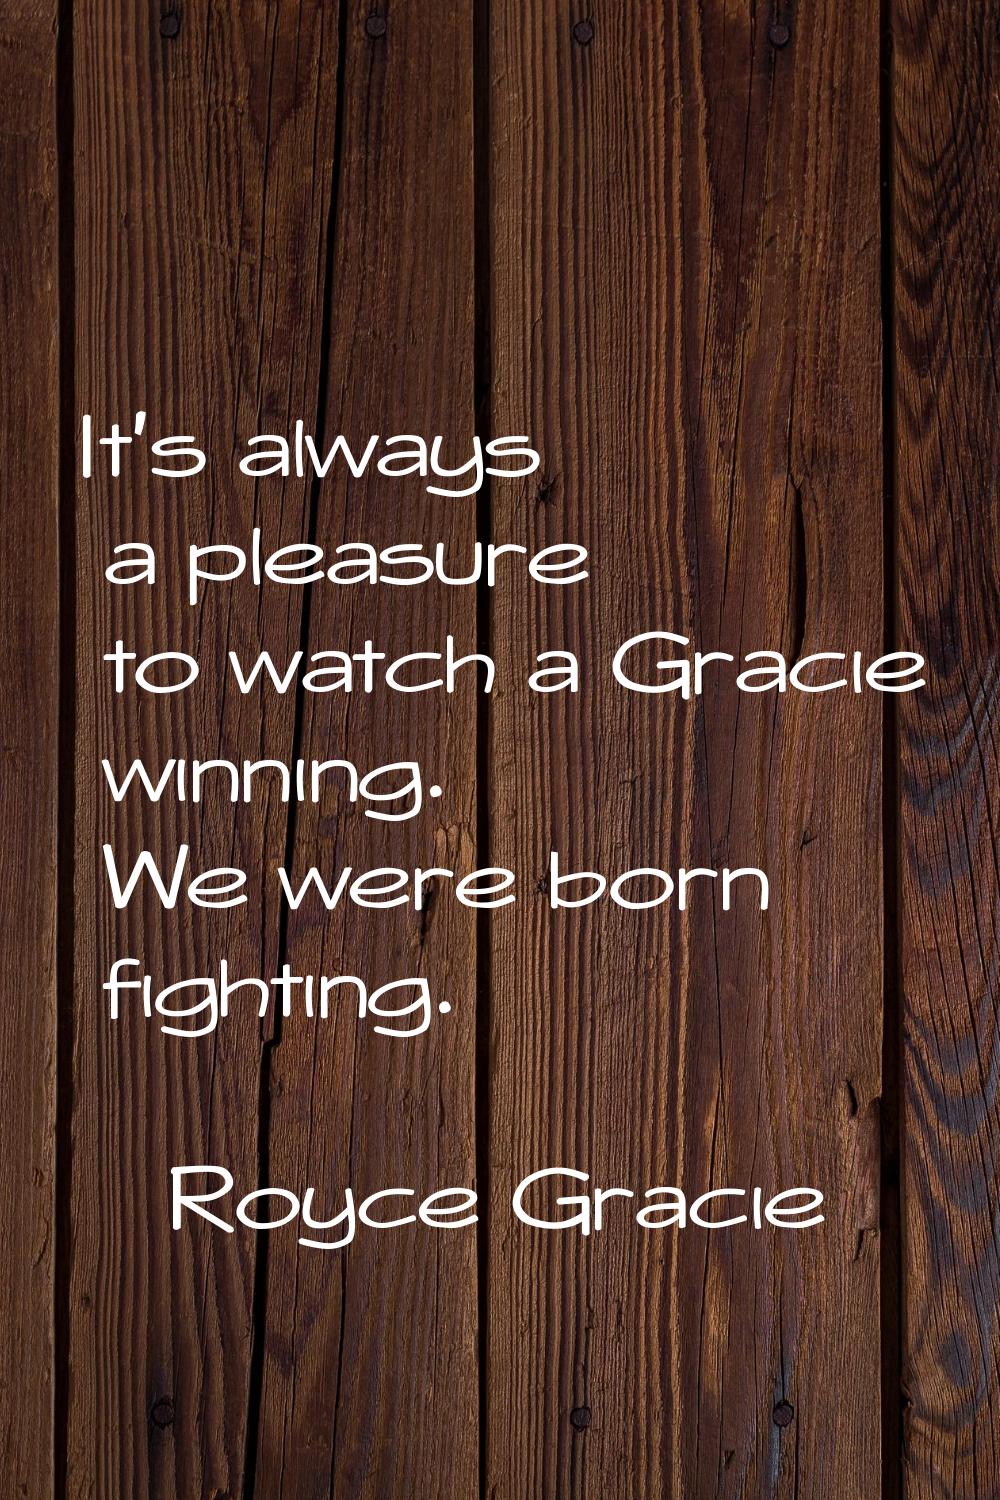 It's always a pleasure to watch a Gracie winning. We were born fighting.